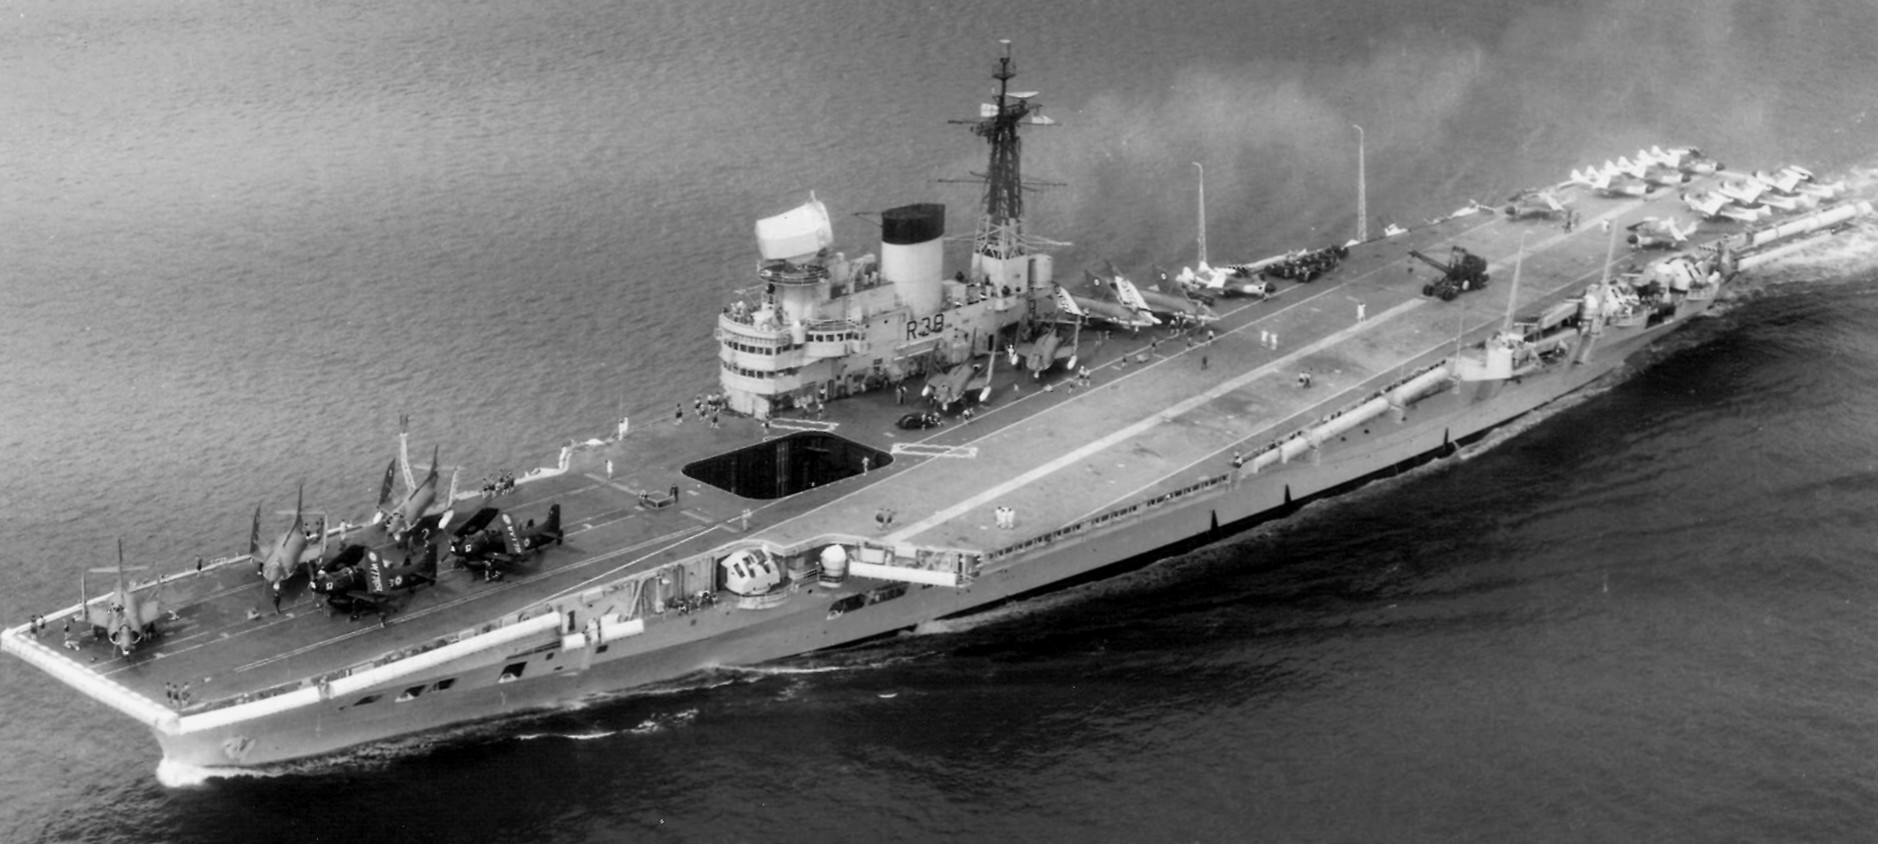 r-38 hms victorious illustrious class aircraft carrier royal navy 05